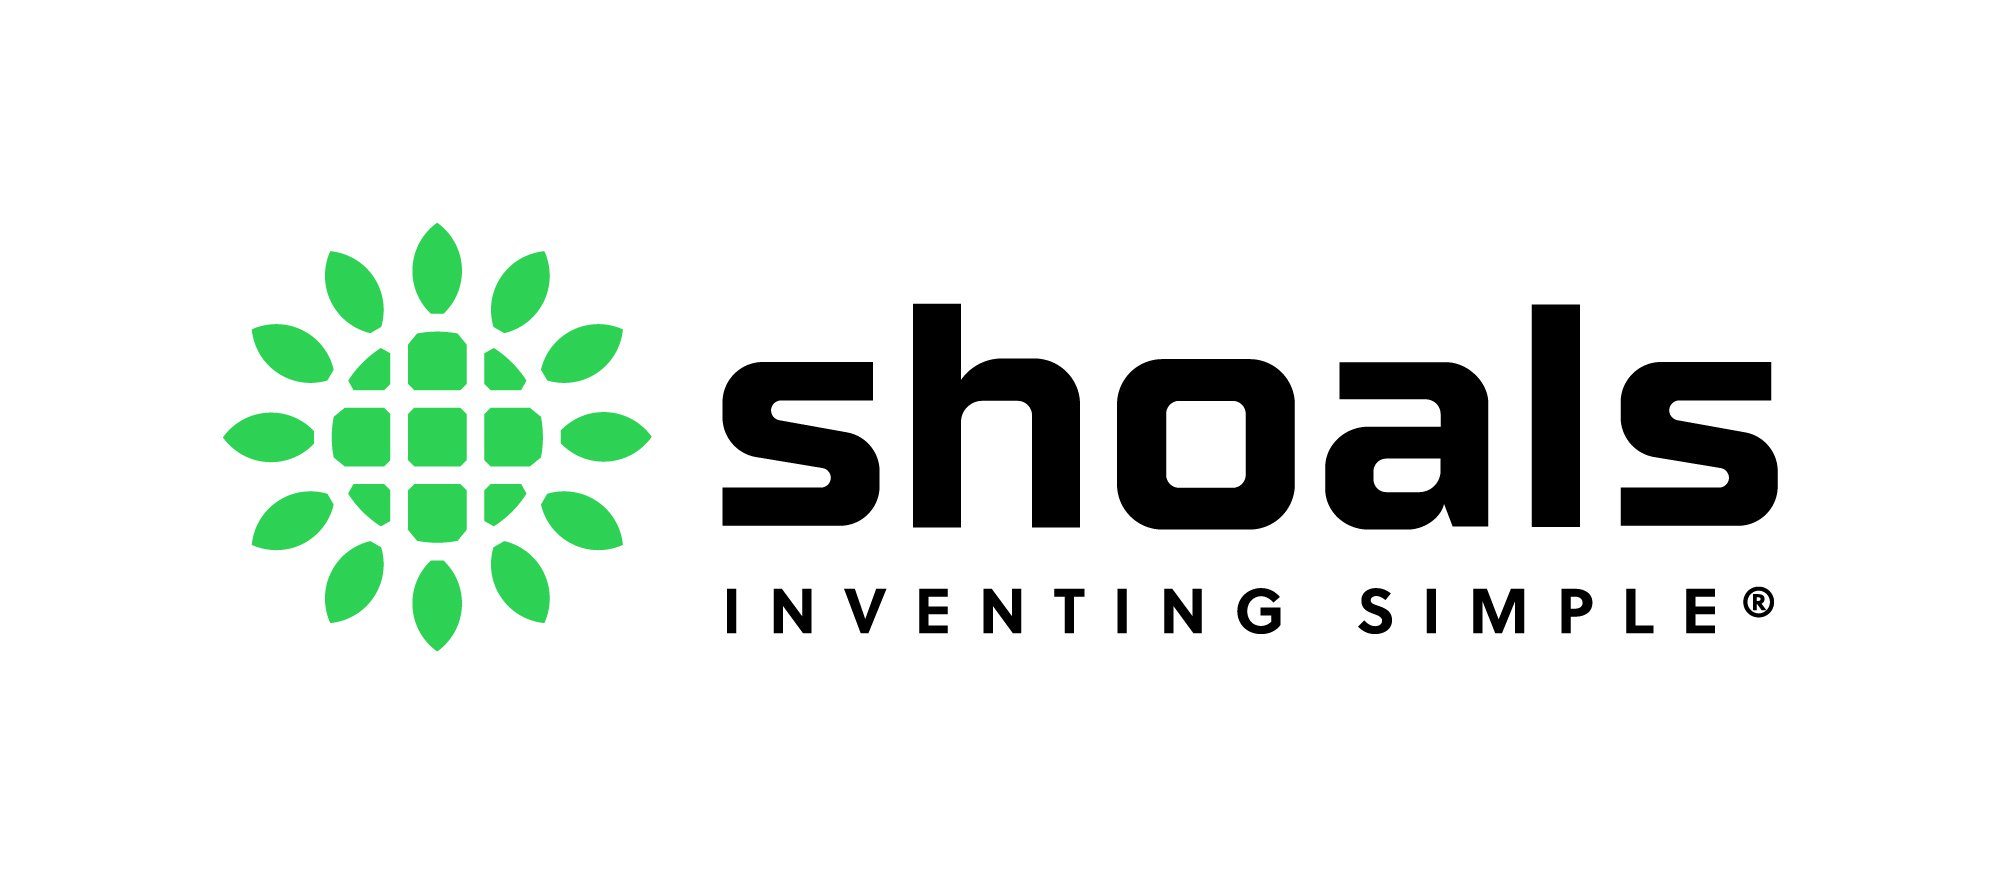 shoals logo on white